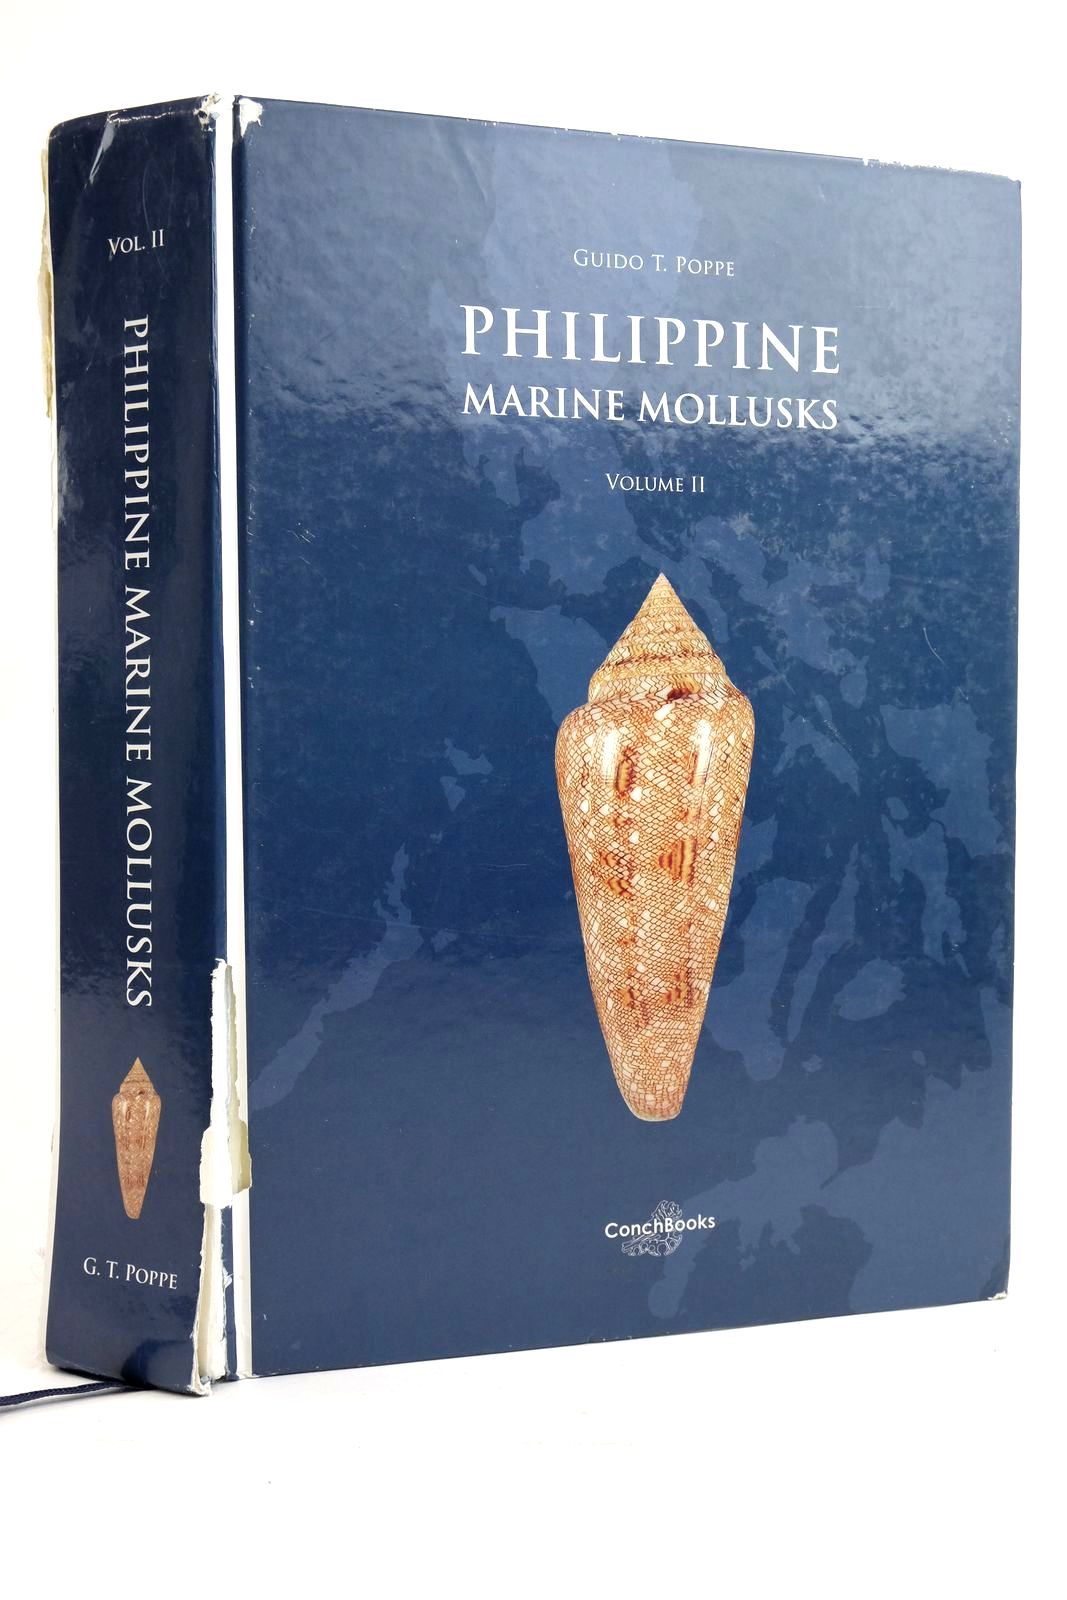 Photo of PHILIPPINE MARINE MOLLUSKS VOLUME II (GASTROPODA - PART 2)- Stock Number: 2135642